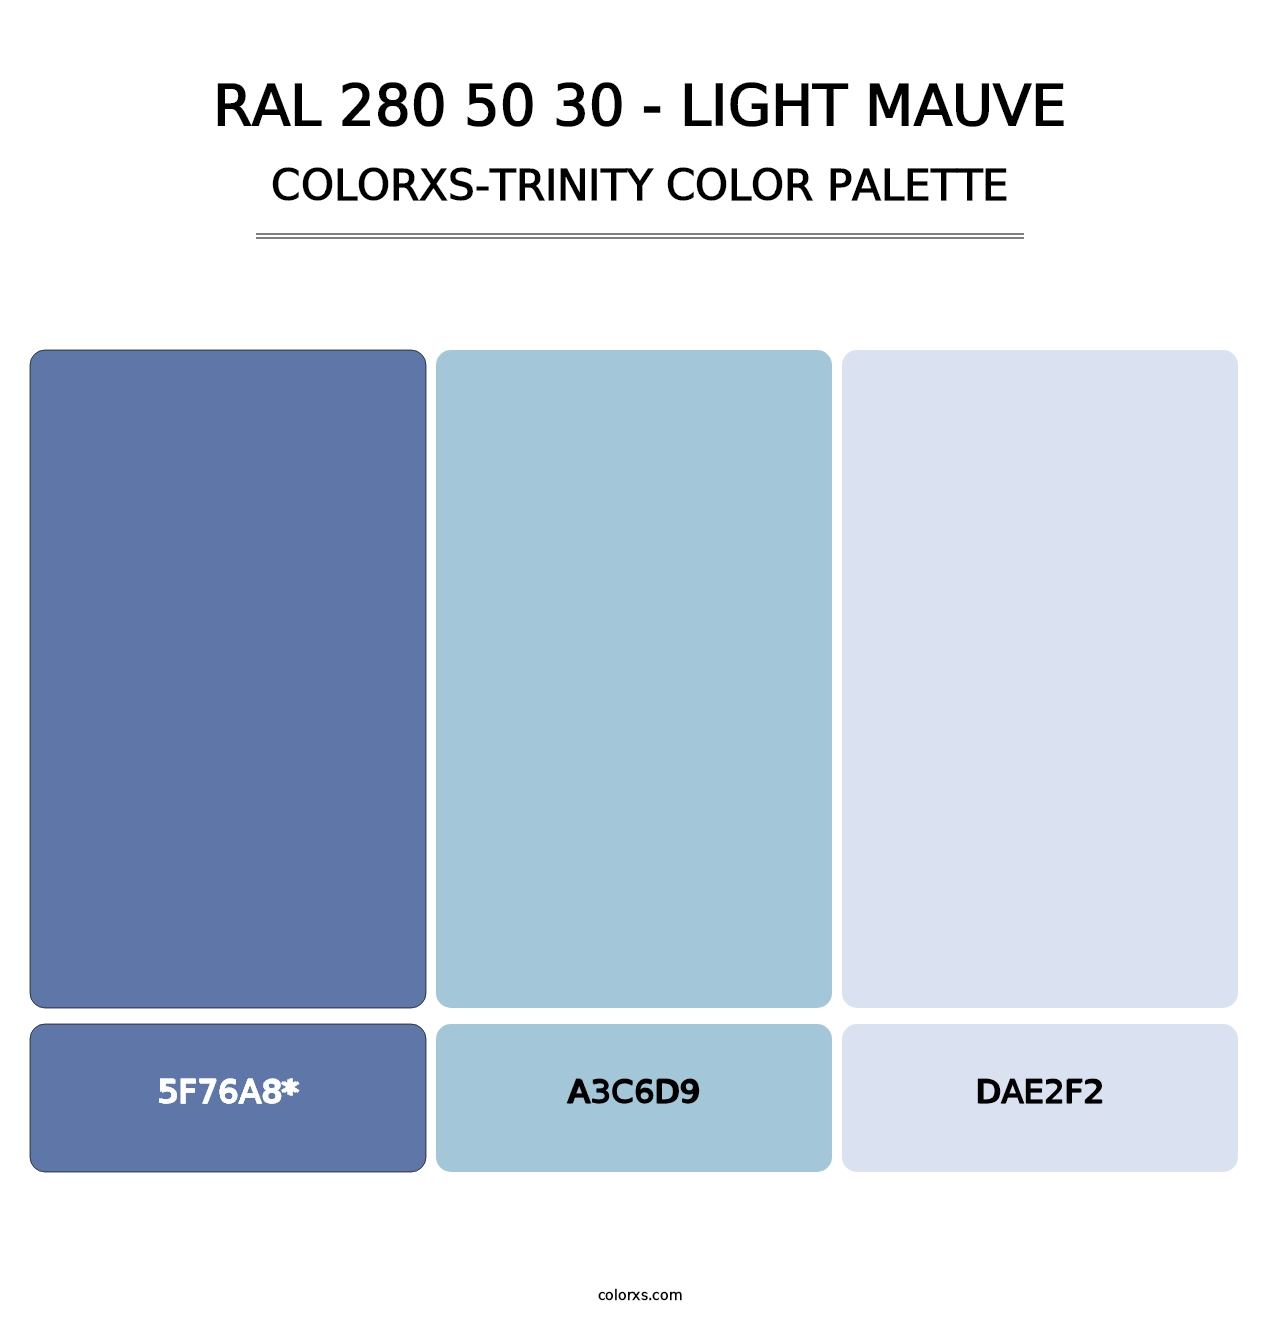 RAL 280 50 30 - Light Mauve - Colorxs Trinity Palette